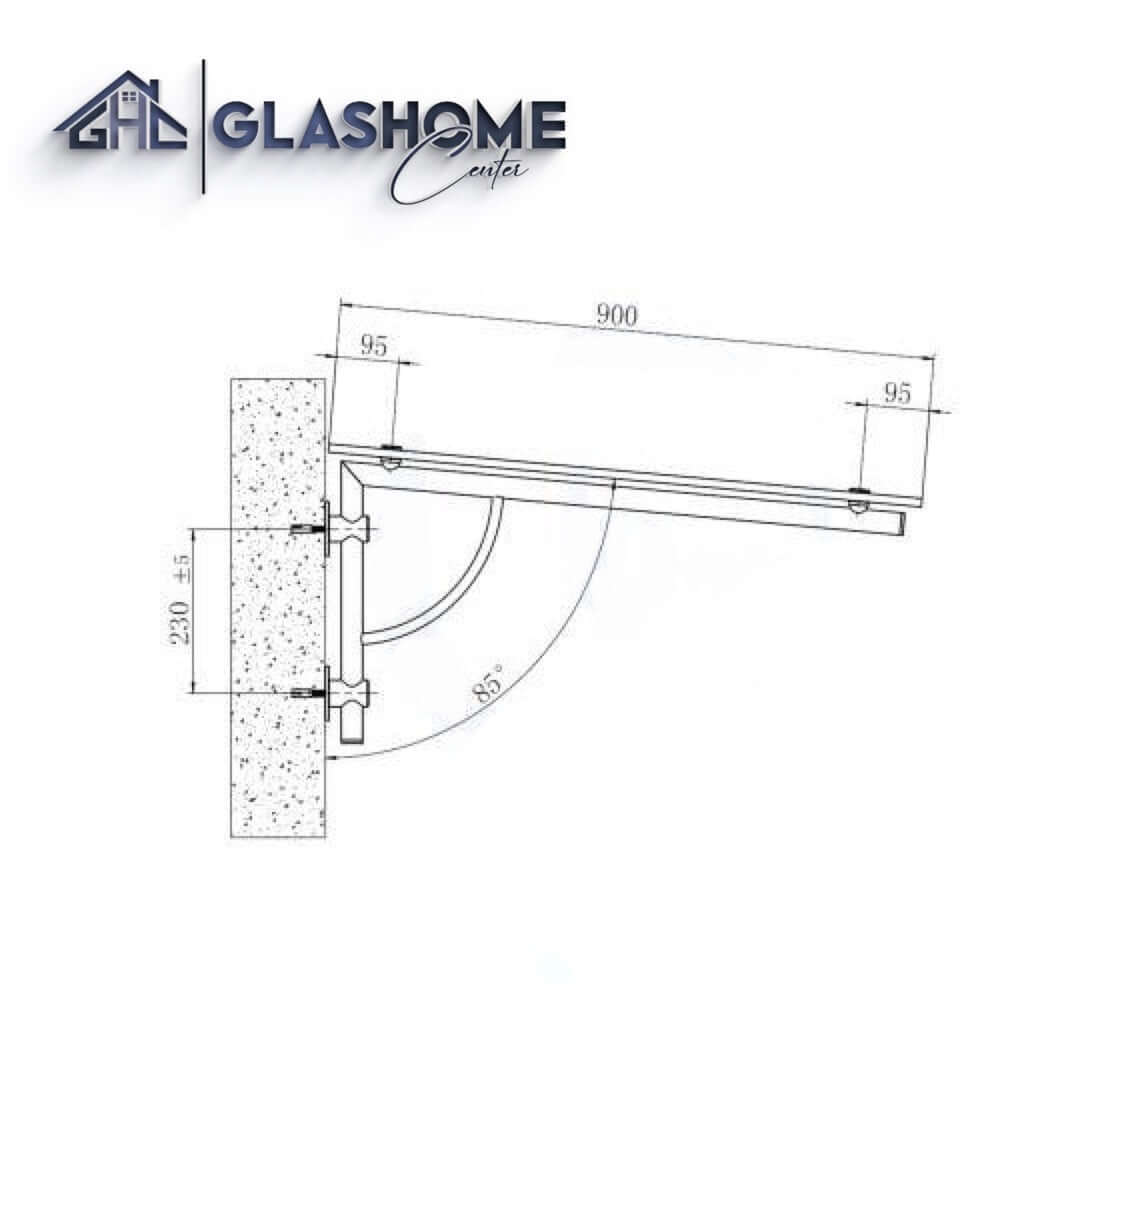 GlasHomeCenter - glass canopy - Clear glass - 170x90cm - 13.1mm VSG - incl. 2 Edelstahlhalterungen Variant "Athens"